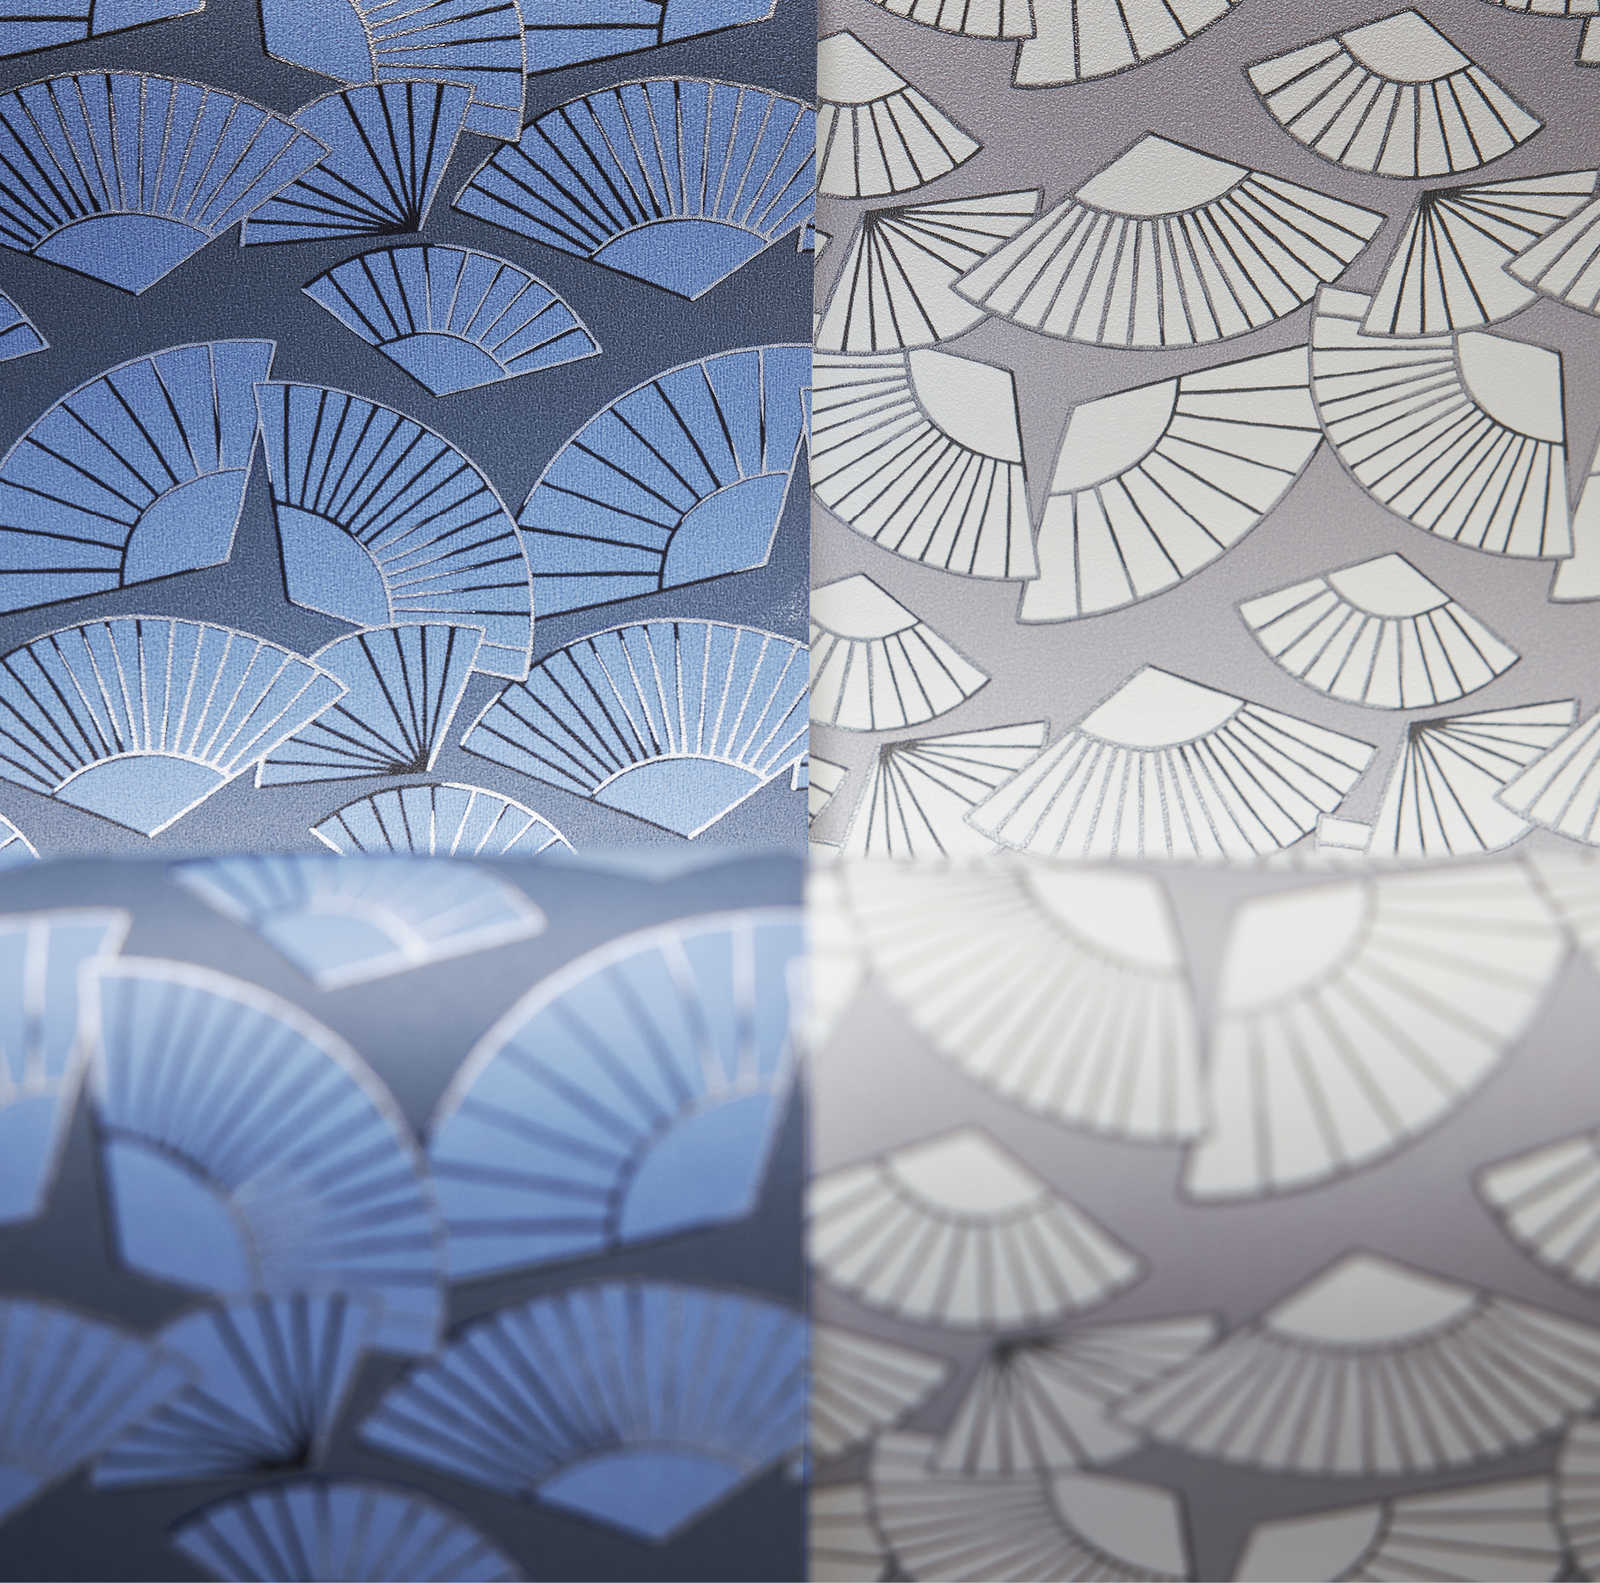             Karl LAGERFELD behangpapier waaier ontwerp - blauw, metallic
        